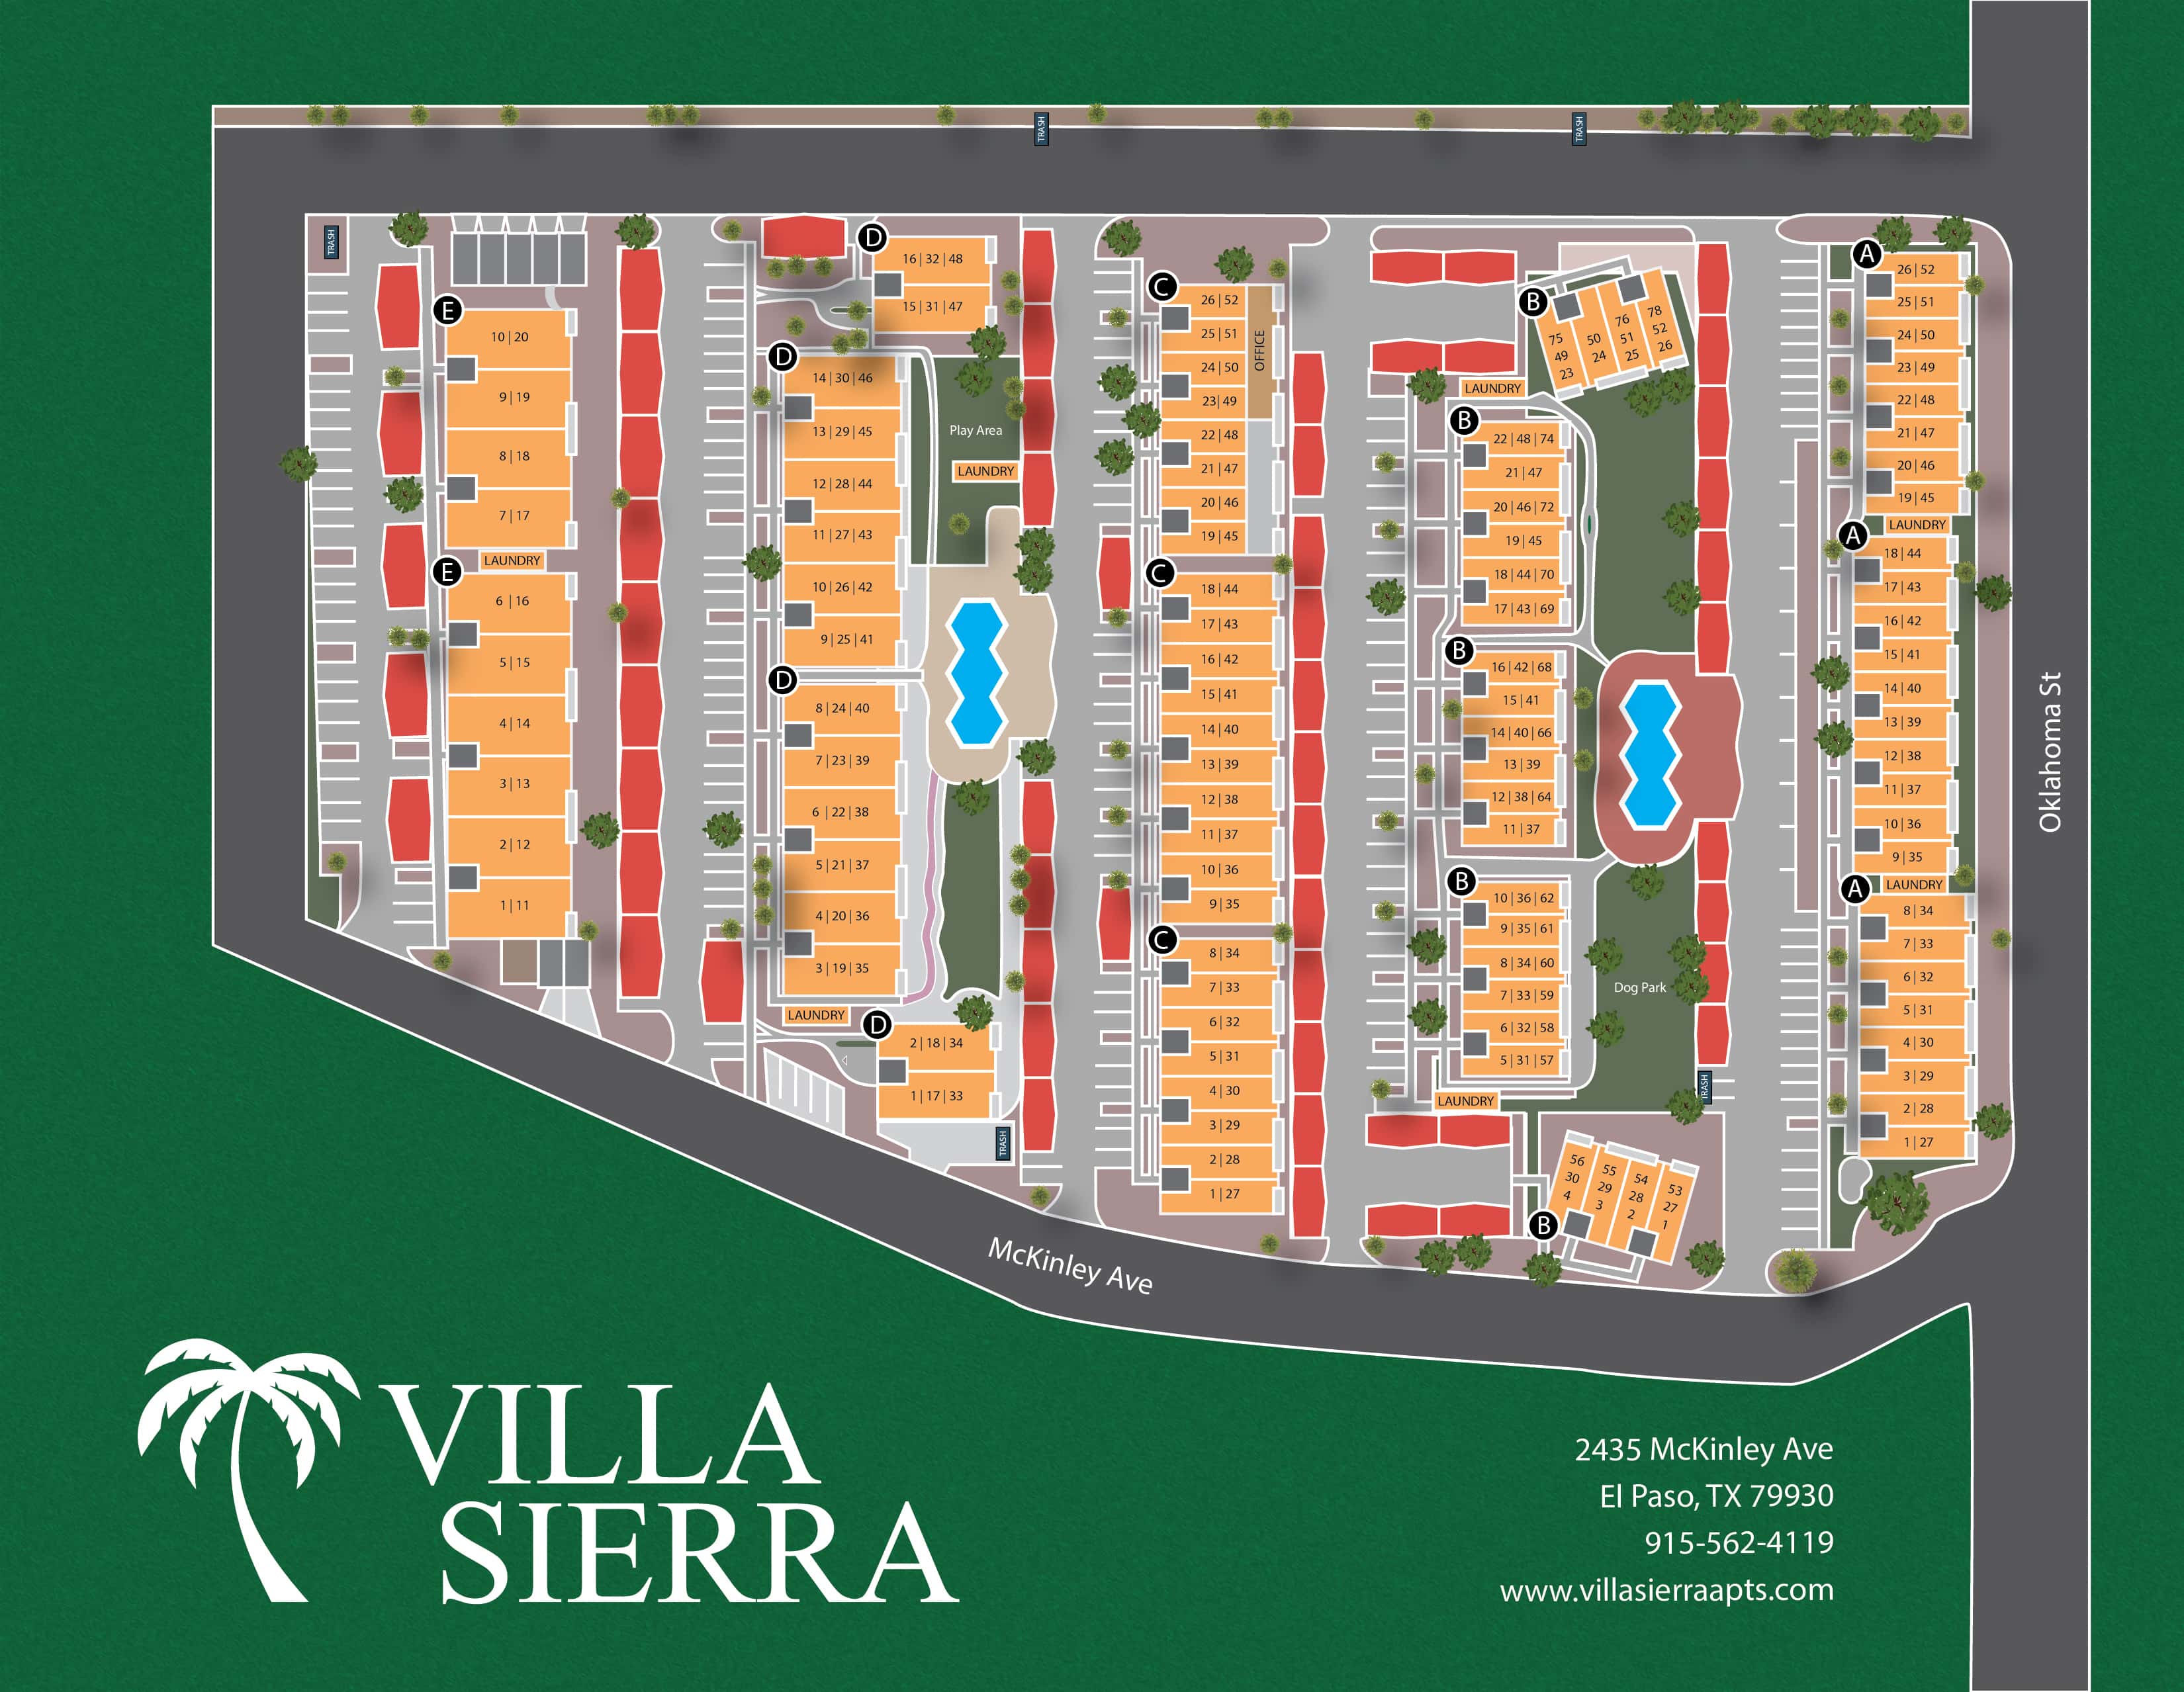 The Villa Sierra Community Page Sitemap Image